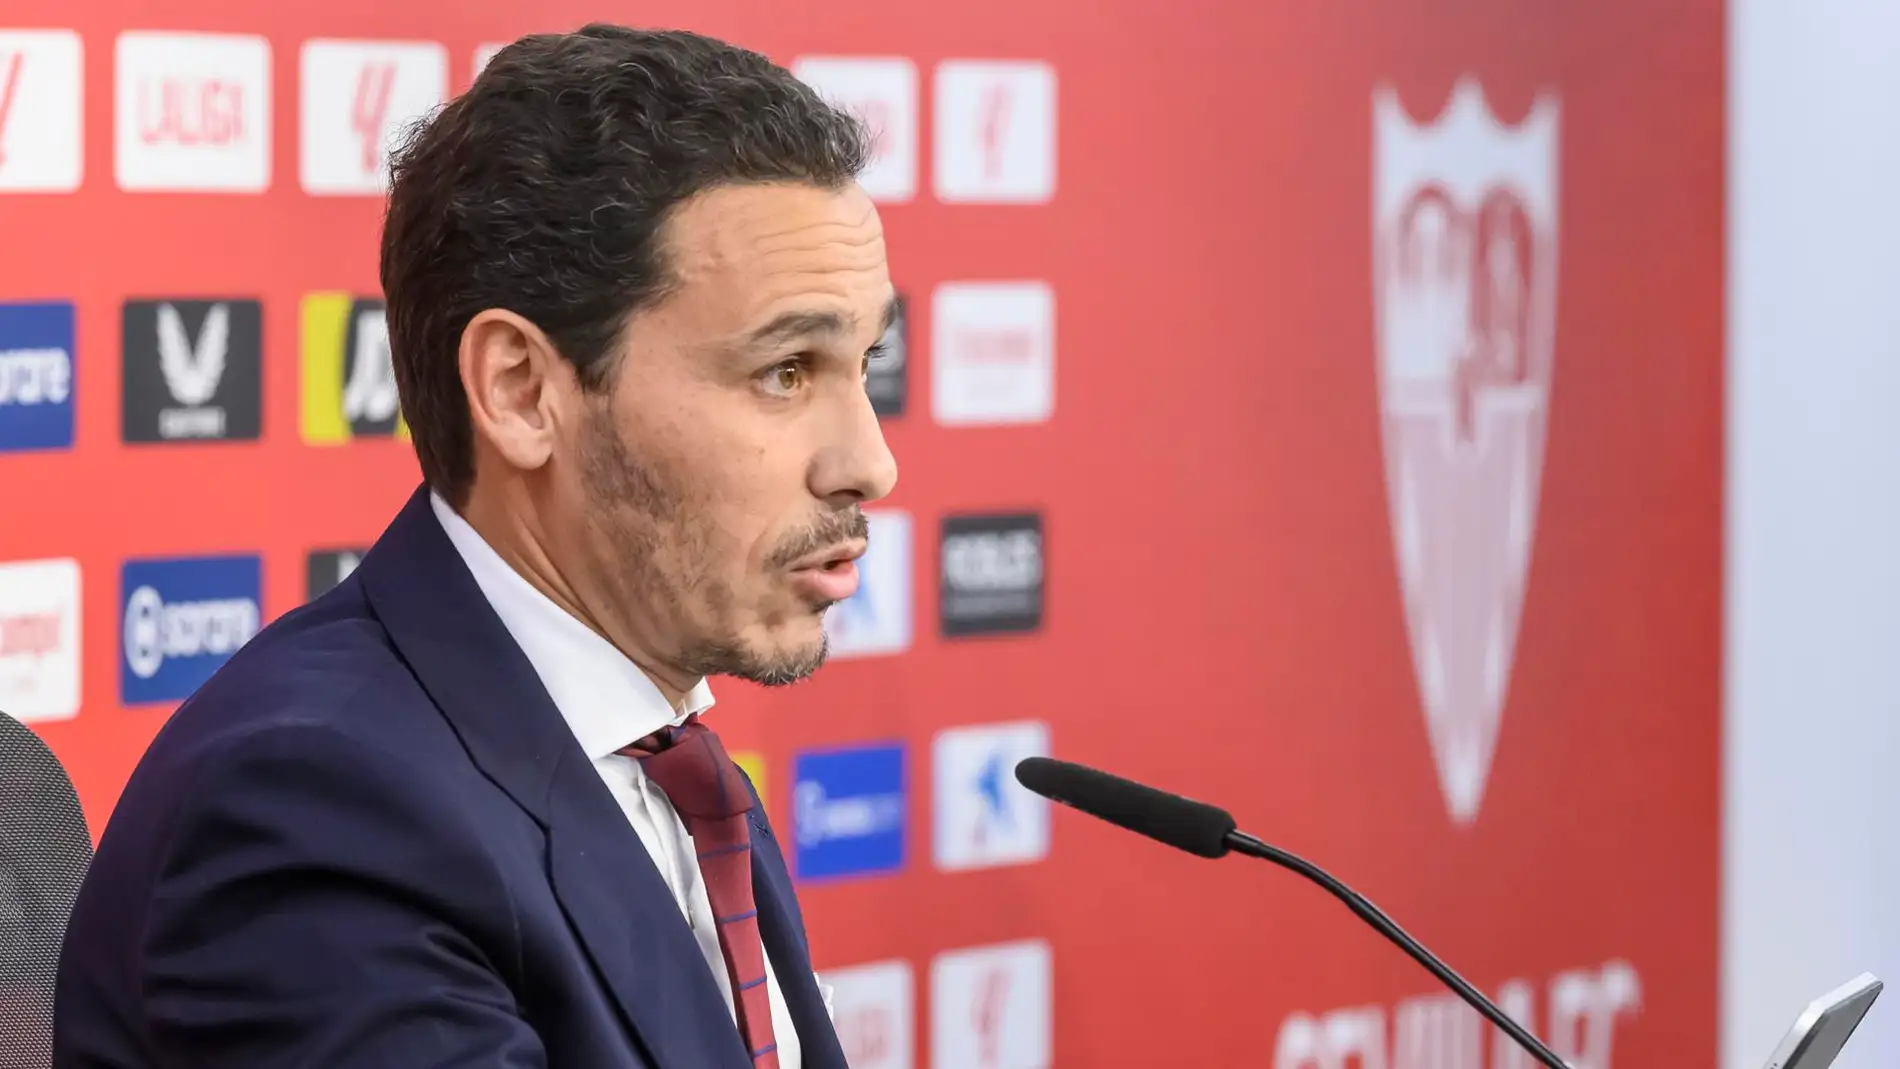 Del Nido Carrasco asume la presidencia del Sevilla FC